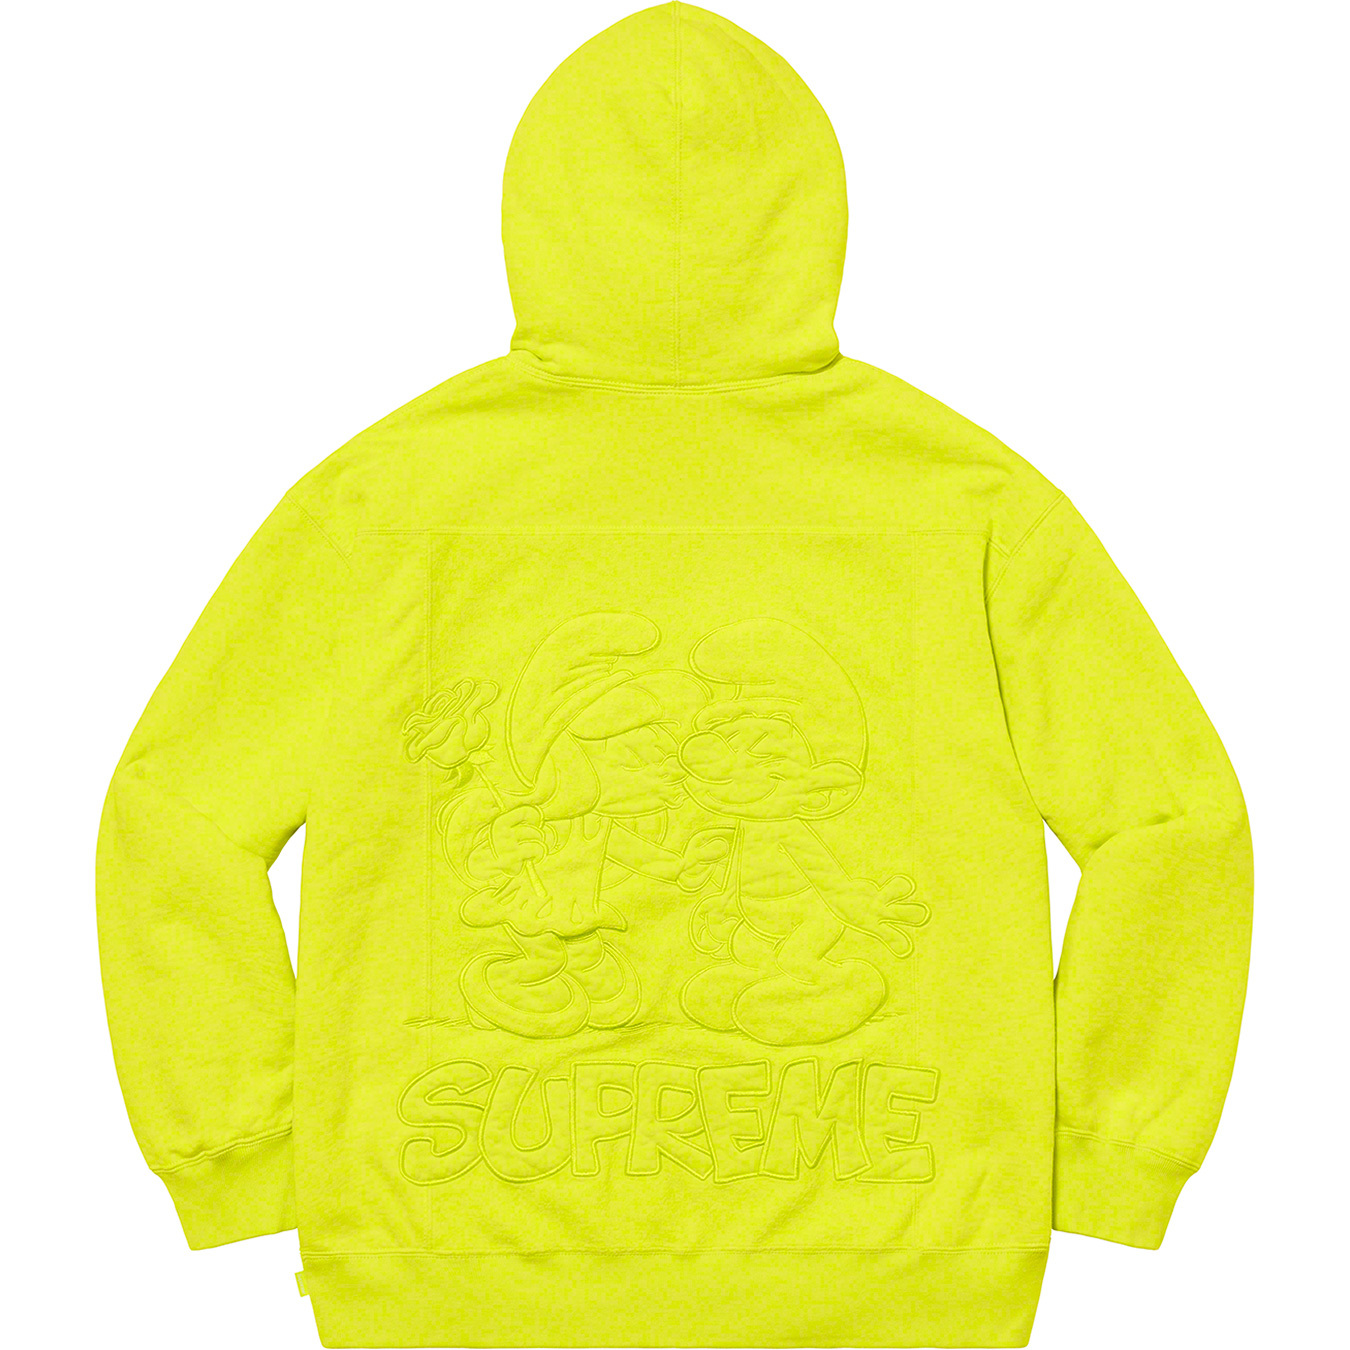 Supreme®/Smurfs™ Hooded Sweatshirt - Supreme Community